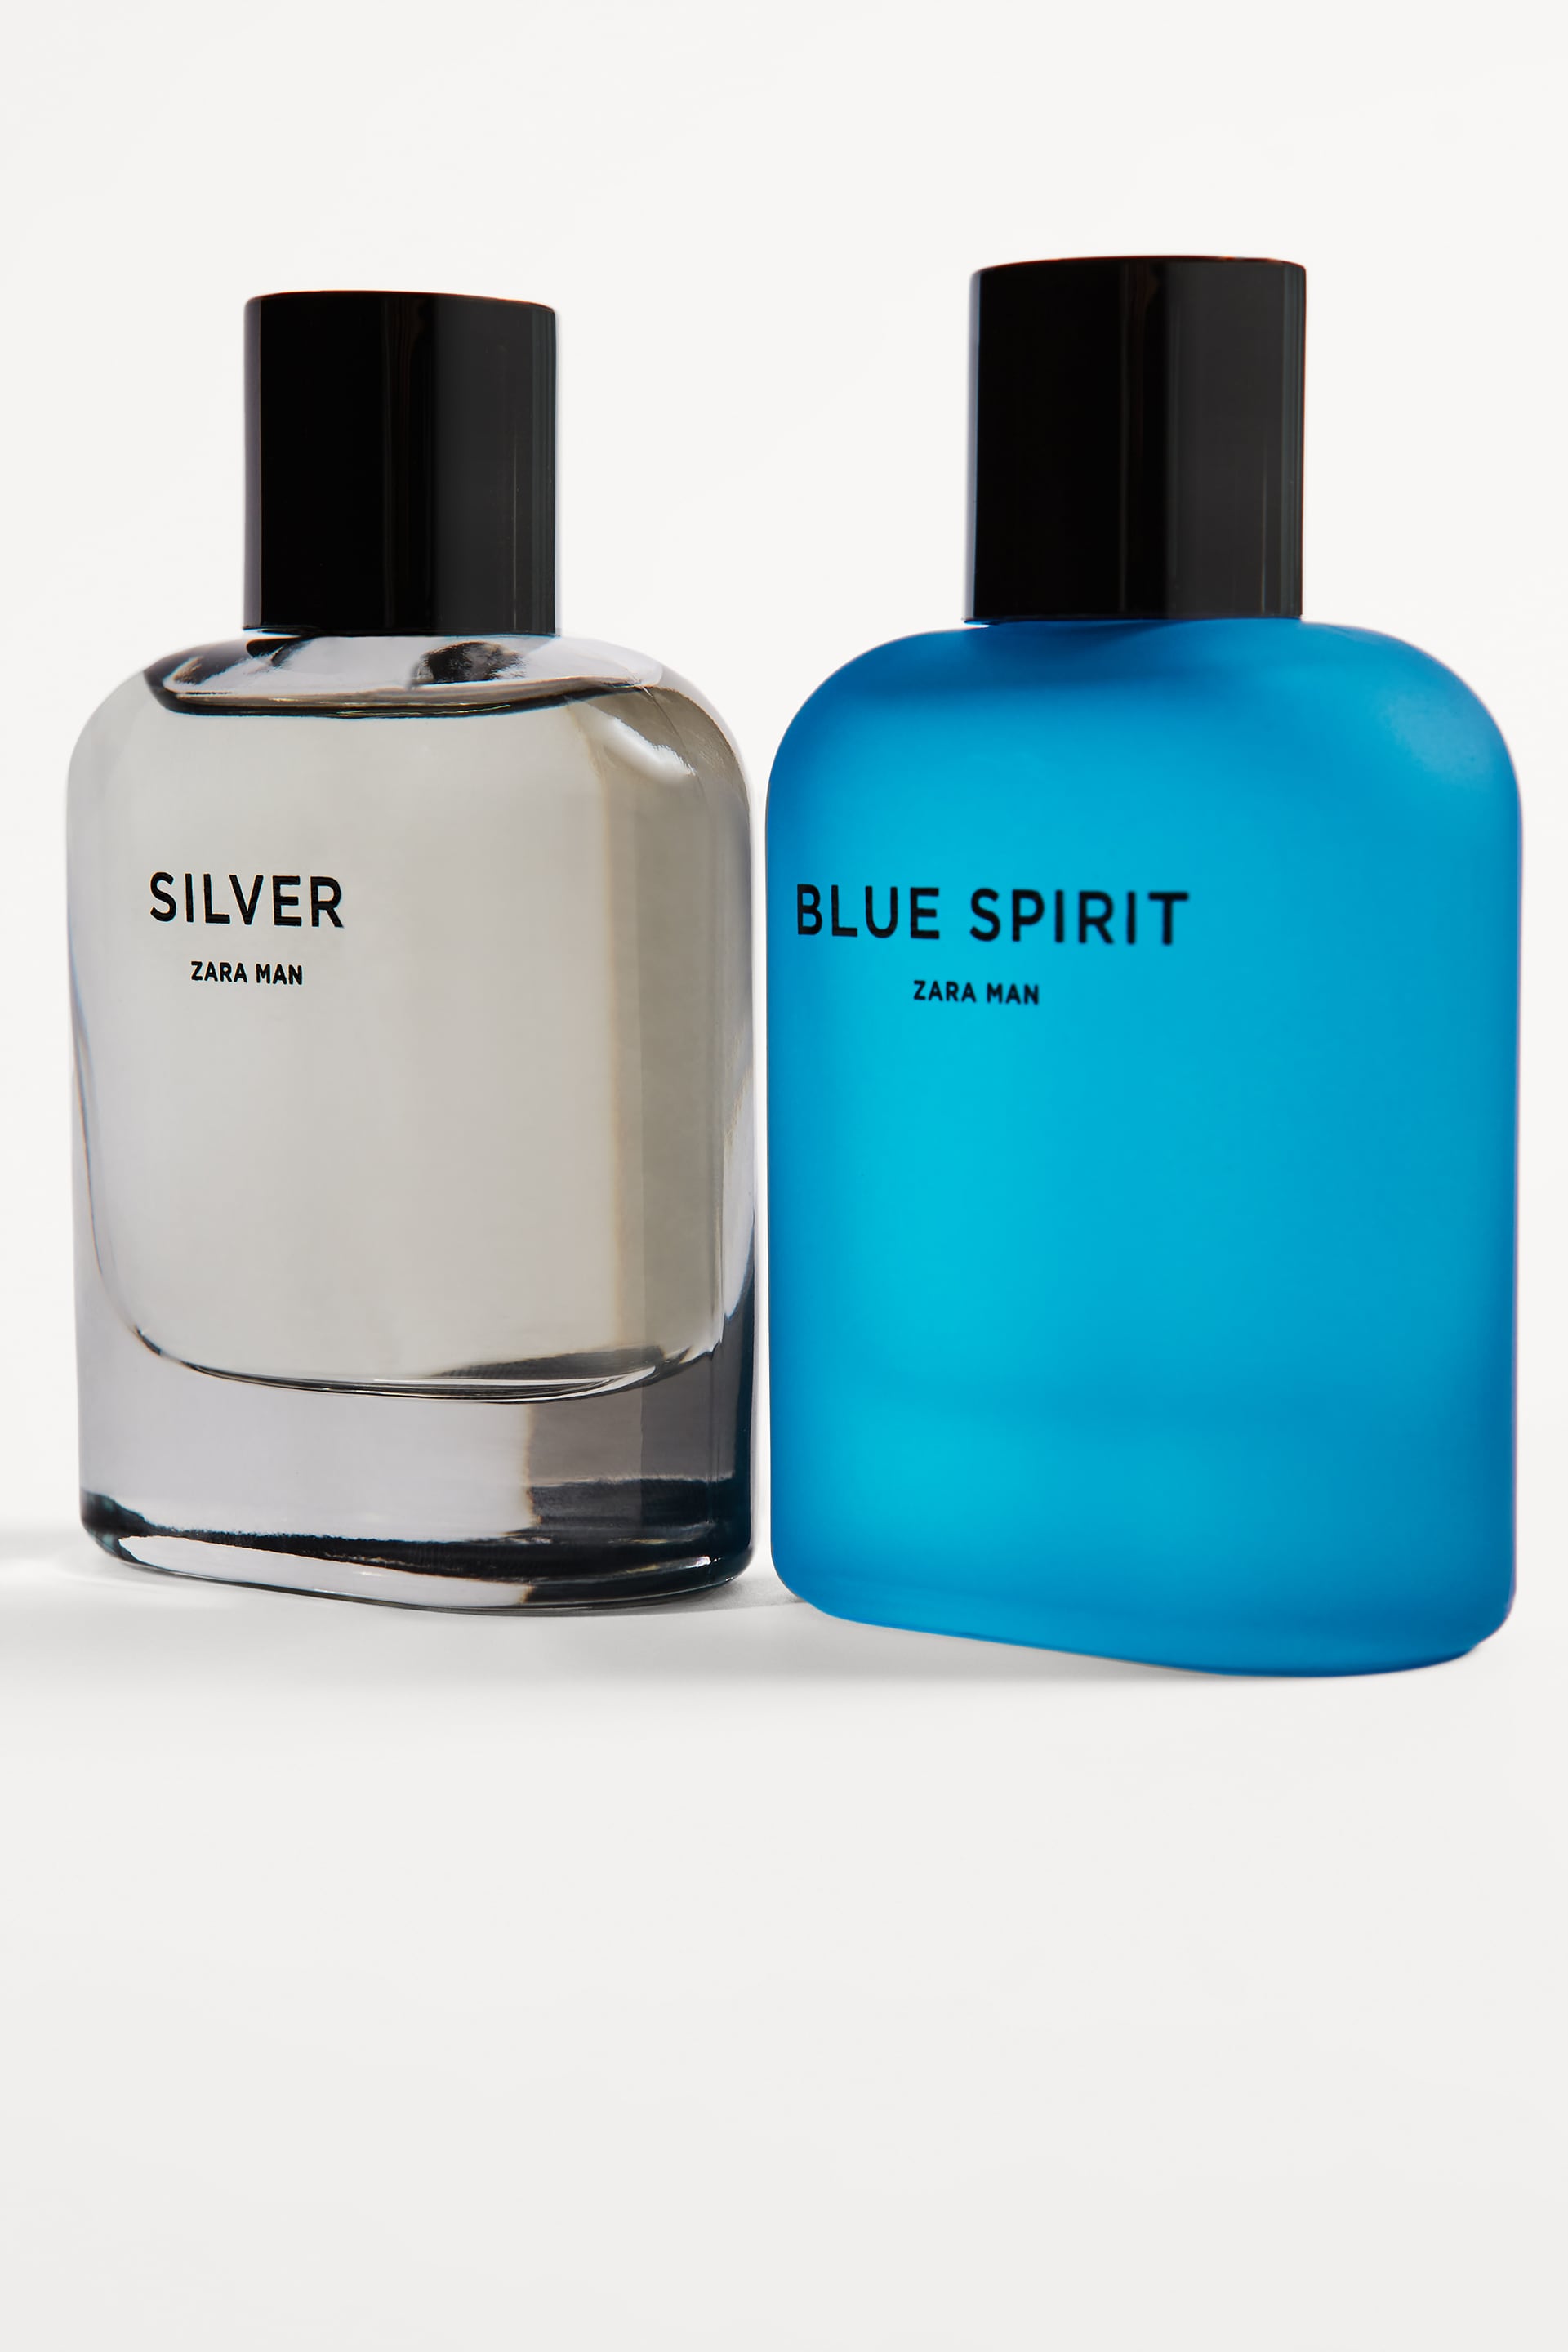 ZARA MAN SILVER and MAN BLUE SPIRIT EDT DUO SET 2 x 100 ml Brand New Sealed